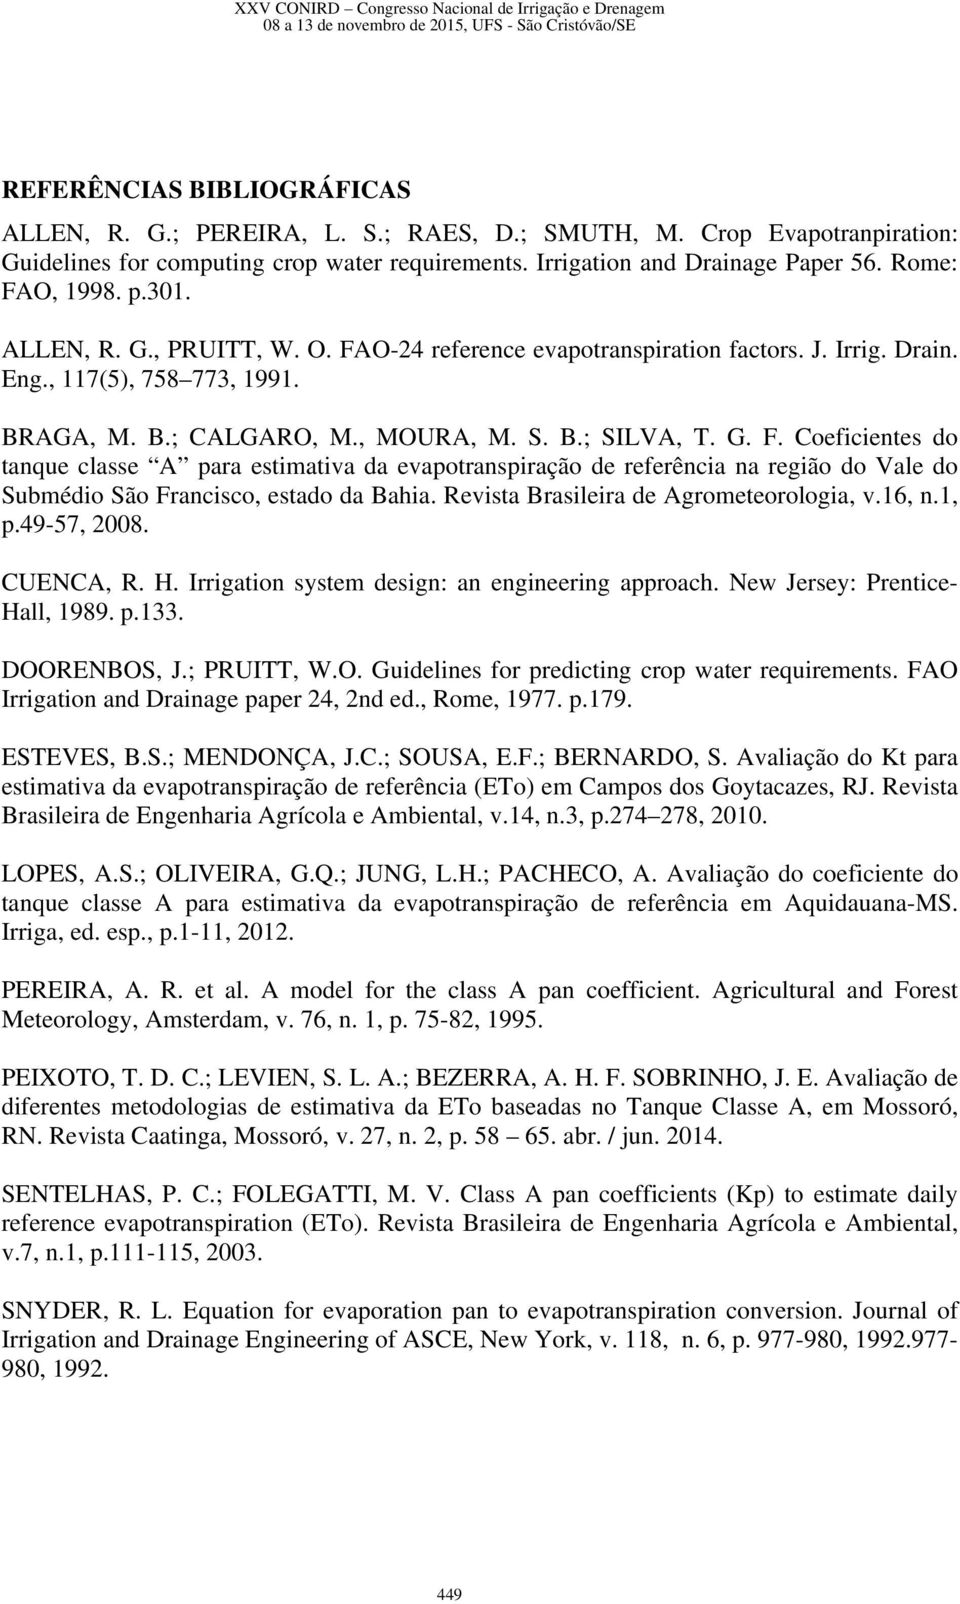 Revista Brasileira de Agrometeorologia, v.16, n.1, p.49-57, 2008. CUENCA, R. H. Irrigation system design: an engineering approach. New Jersey: Prentice- Hall, 1989. p.133. DOO